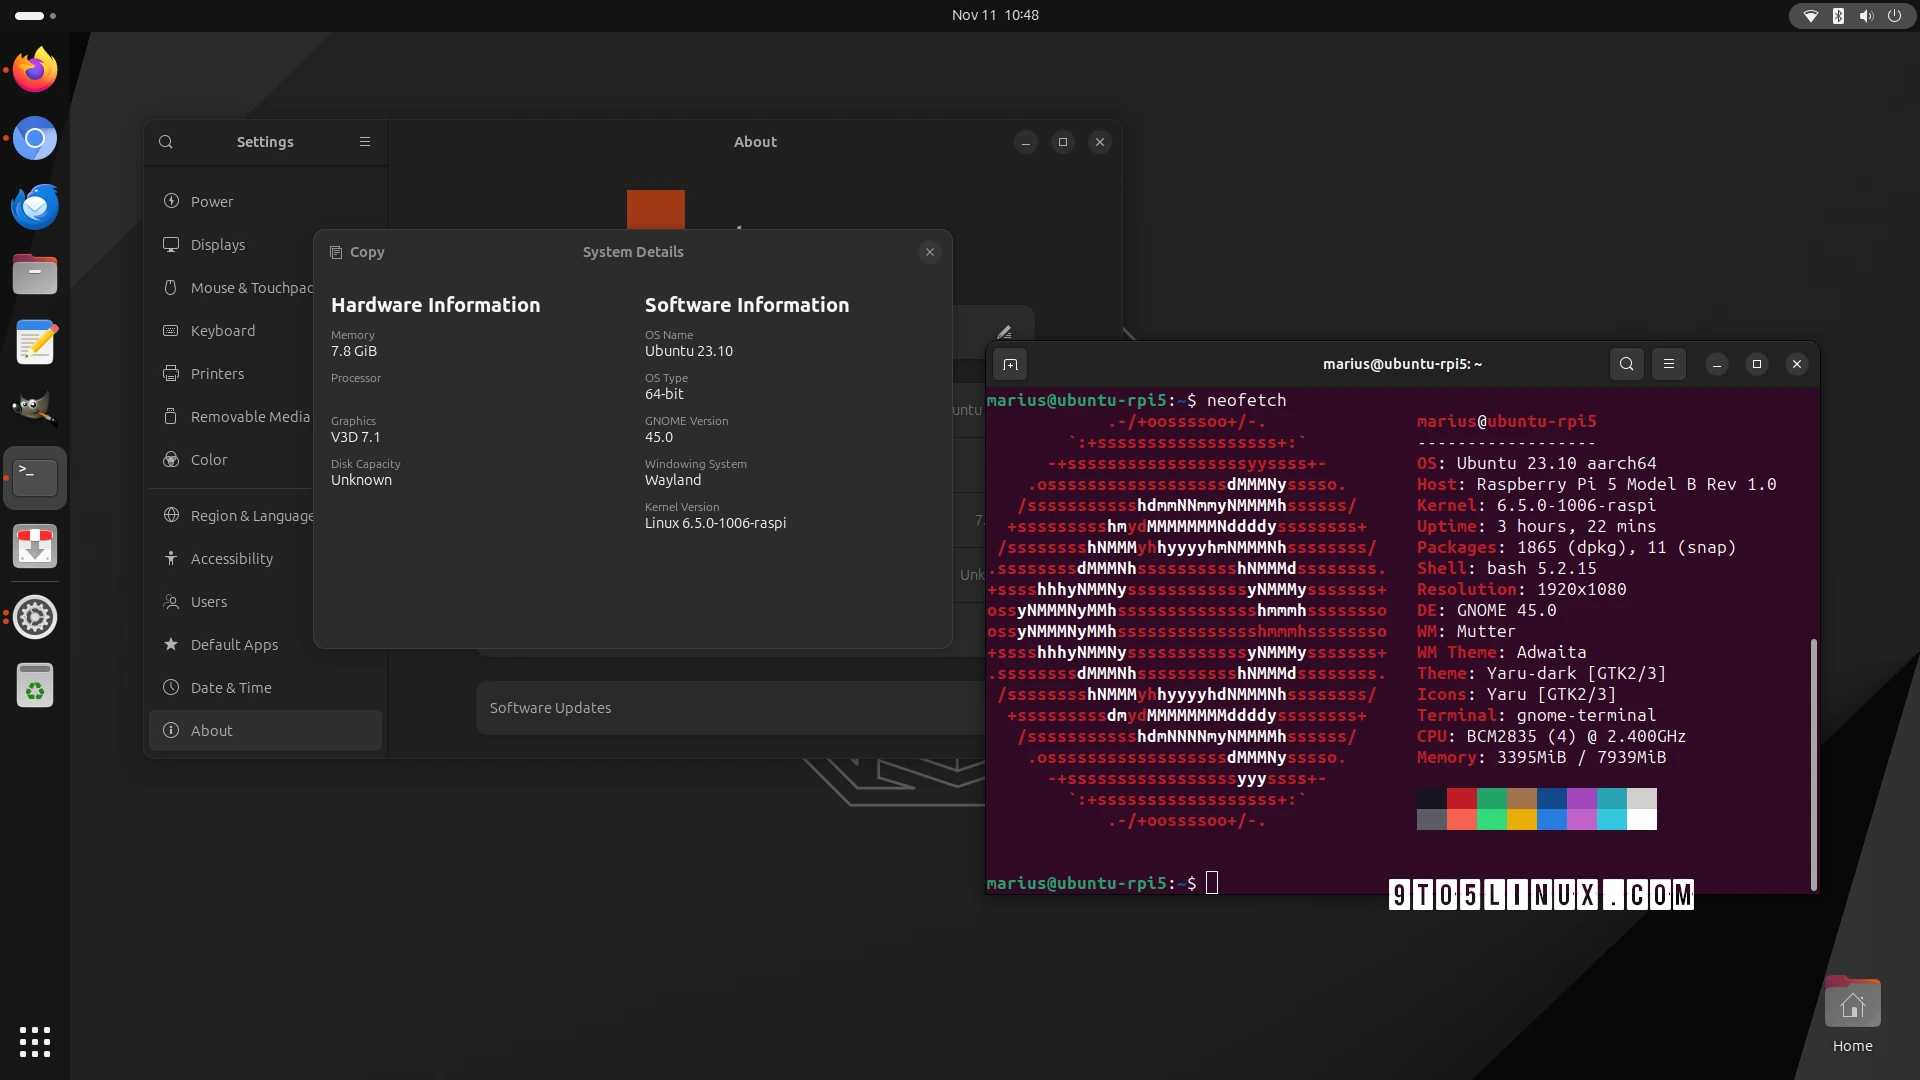 First Look at Ubuntu 23.10 on Raspberry Pi 5